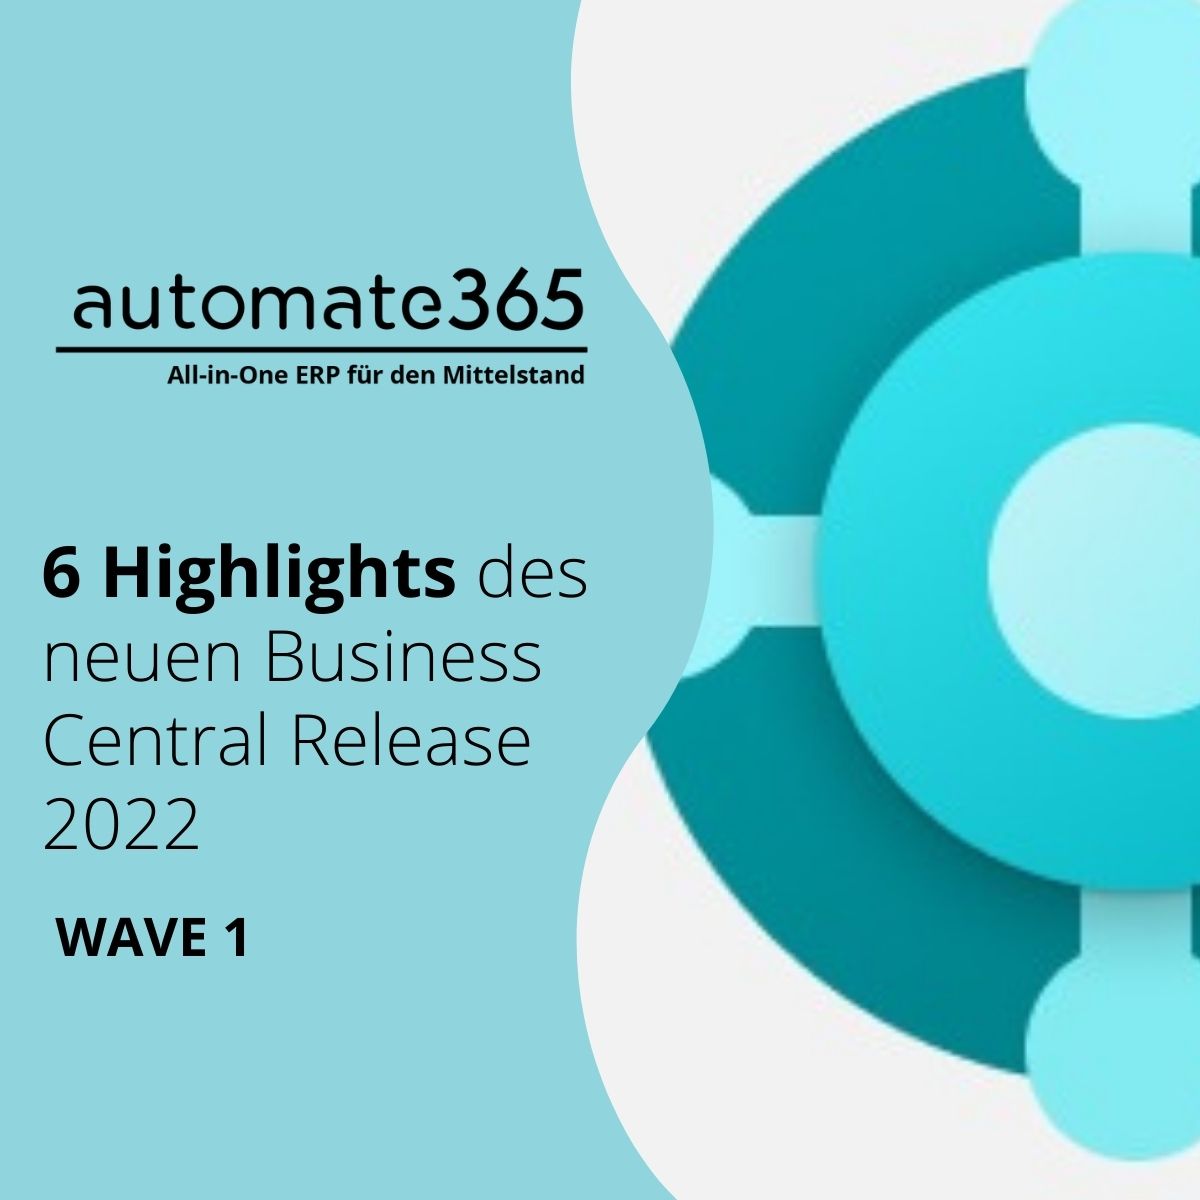 Highlights des neuen Business Central Release 2022 Wave 1